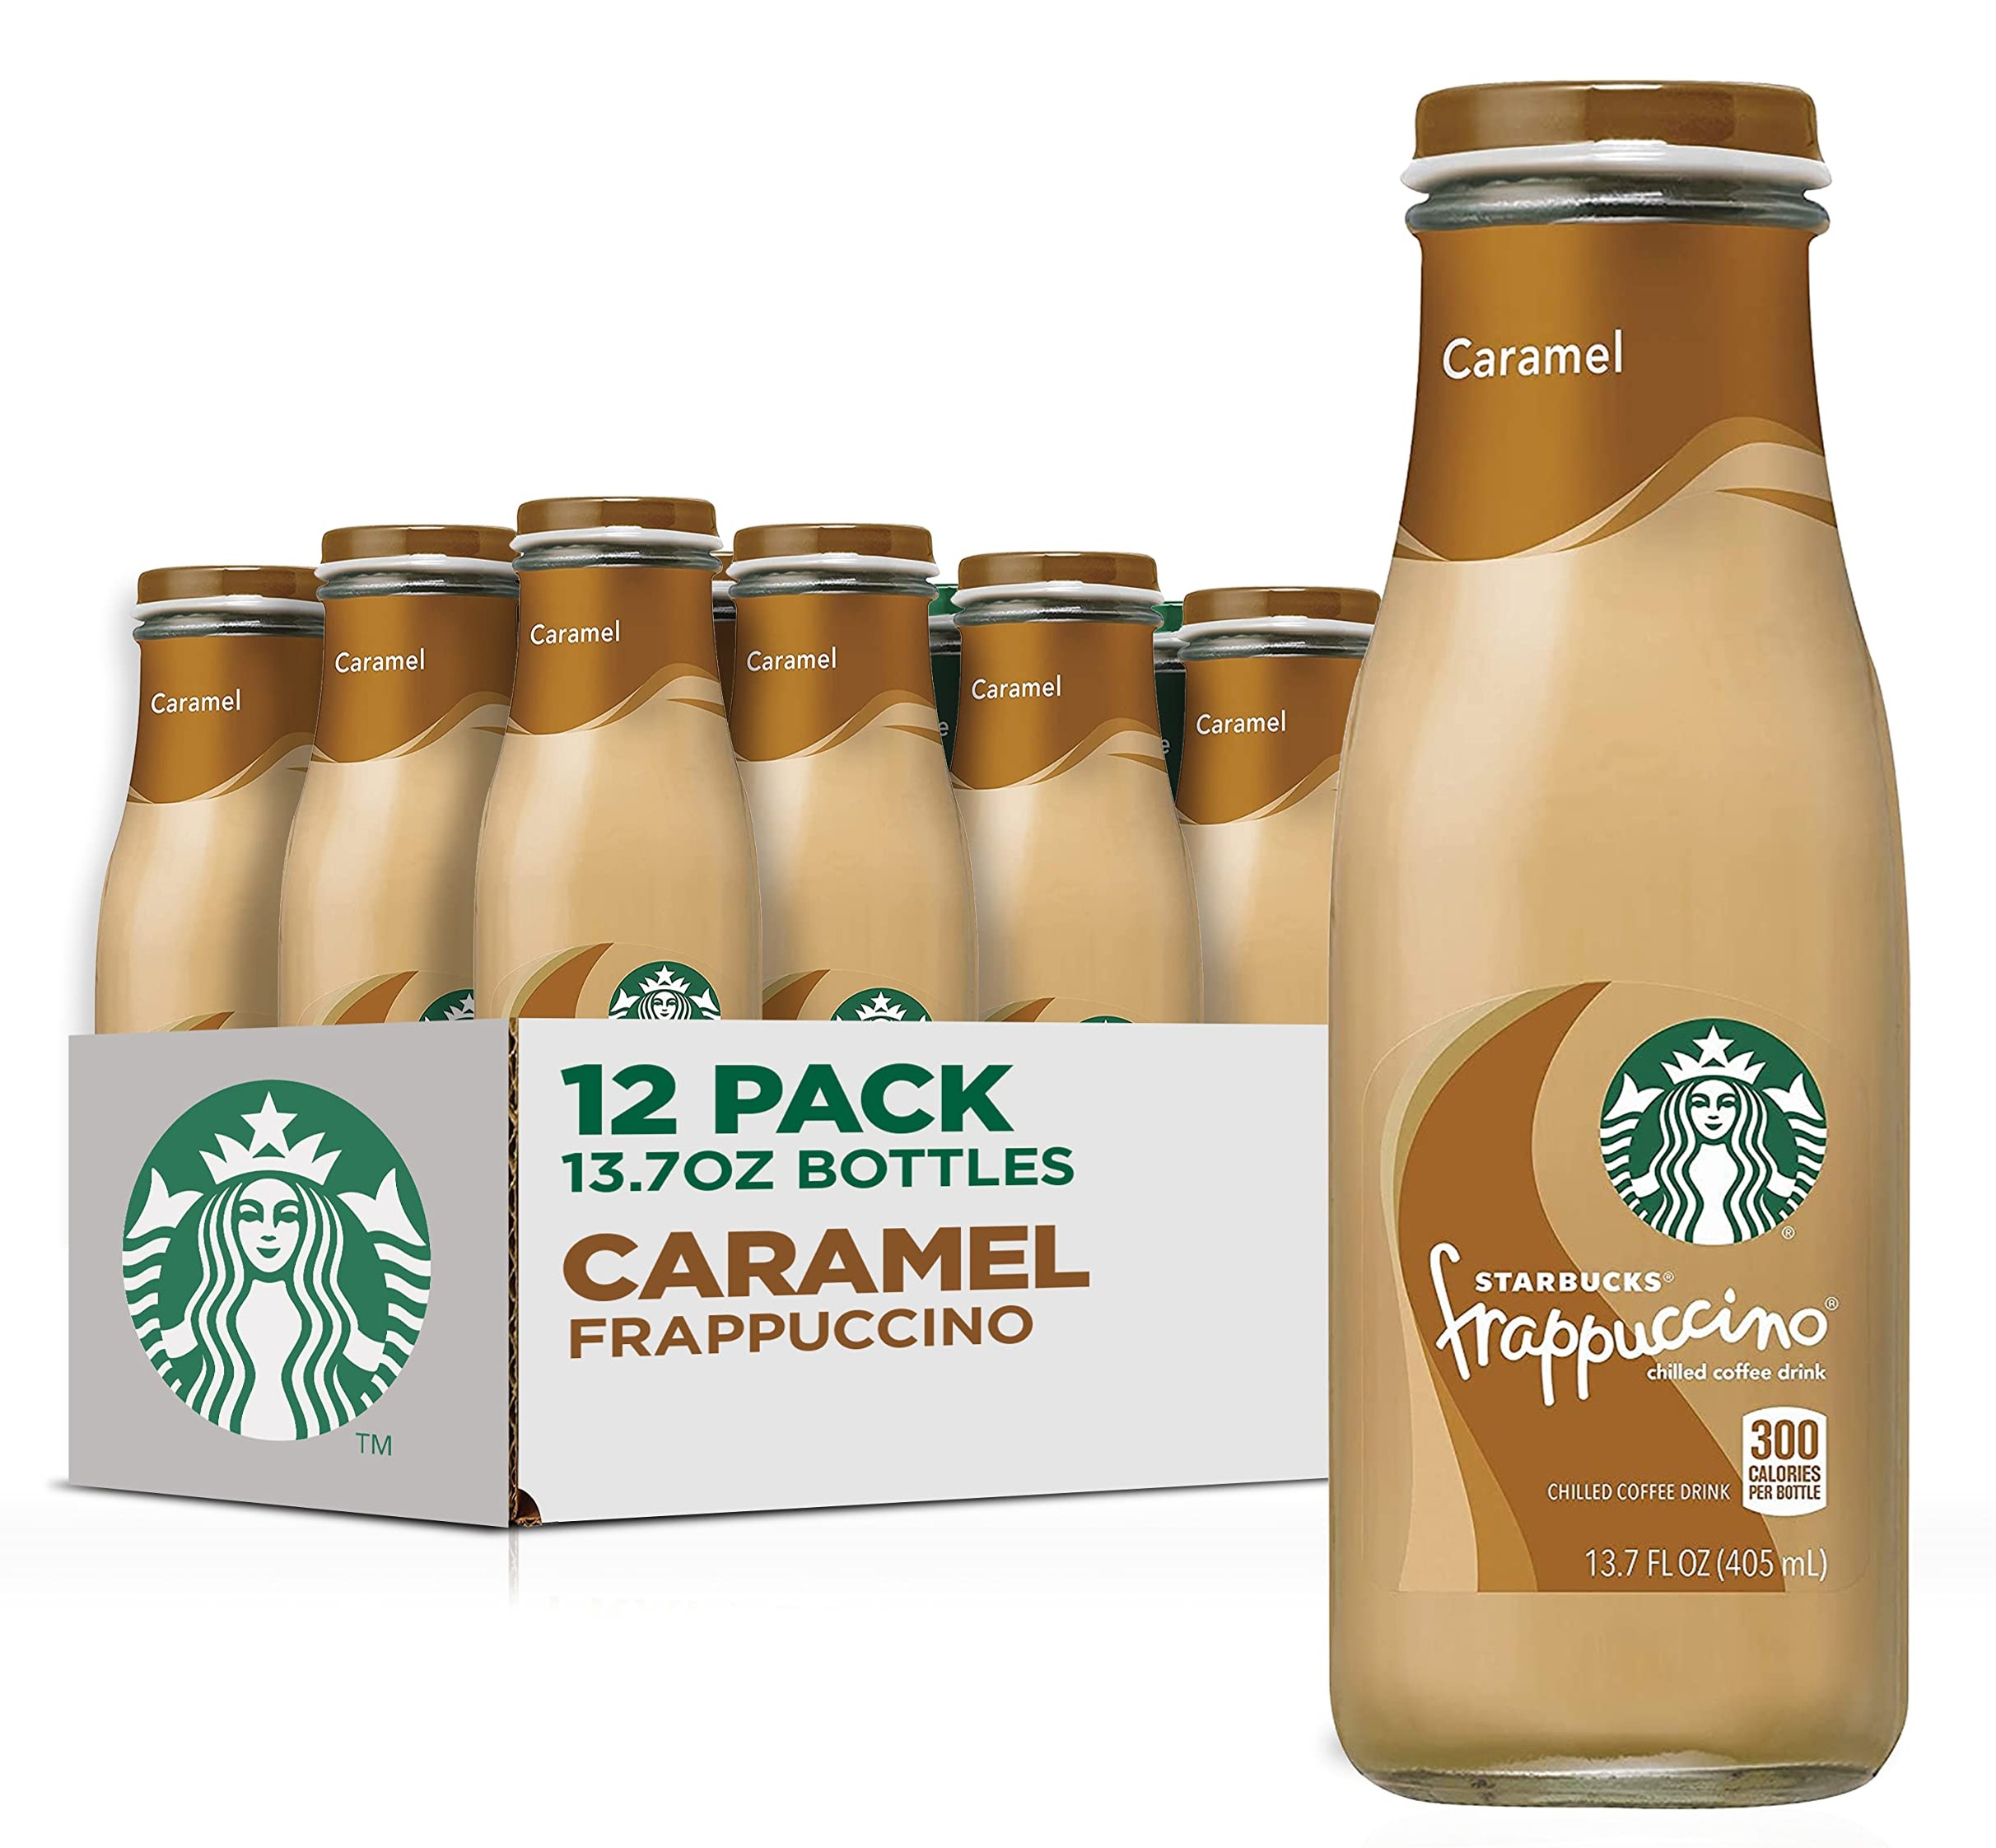 Starbucks Frappuccino Coffee Drink, Caramel, 13.7 fl oz Bottles (12 Pack) $18.69 (Warehouse Deal)